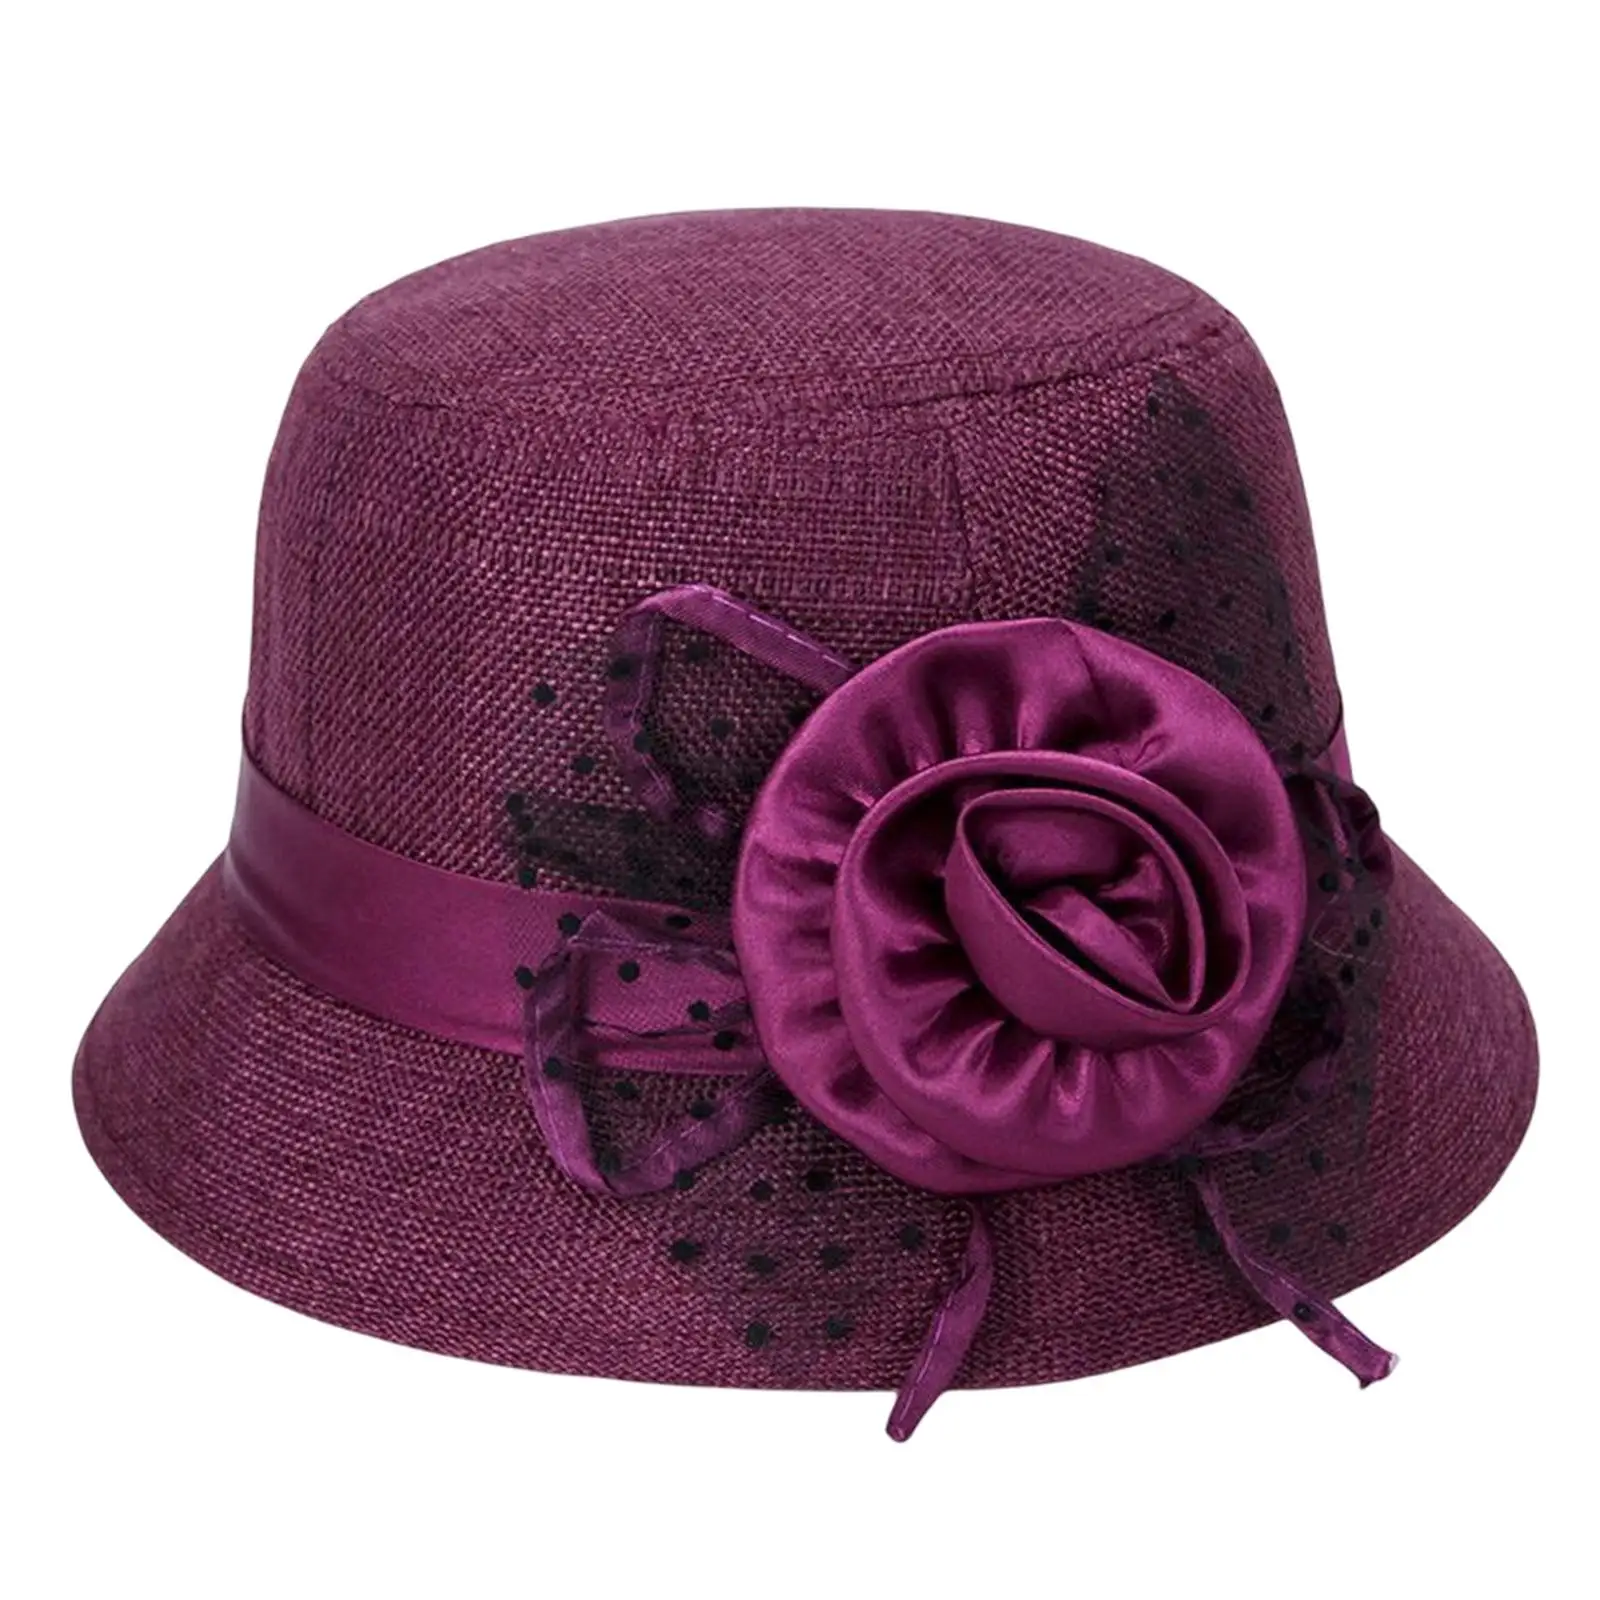 Women Top Hat Decorative Sun Protection Beach Sun Hat Fashion Bucket Hat Casual Sunhat Summer Hat for Summer Photo Props Outdoor